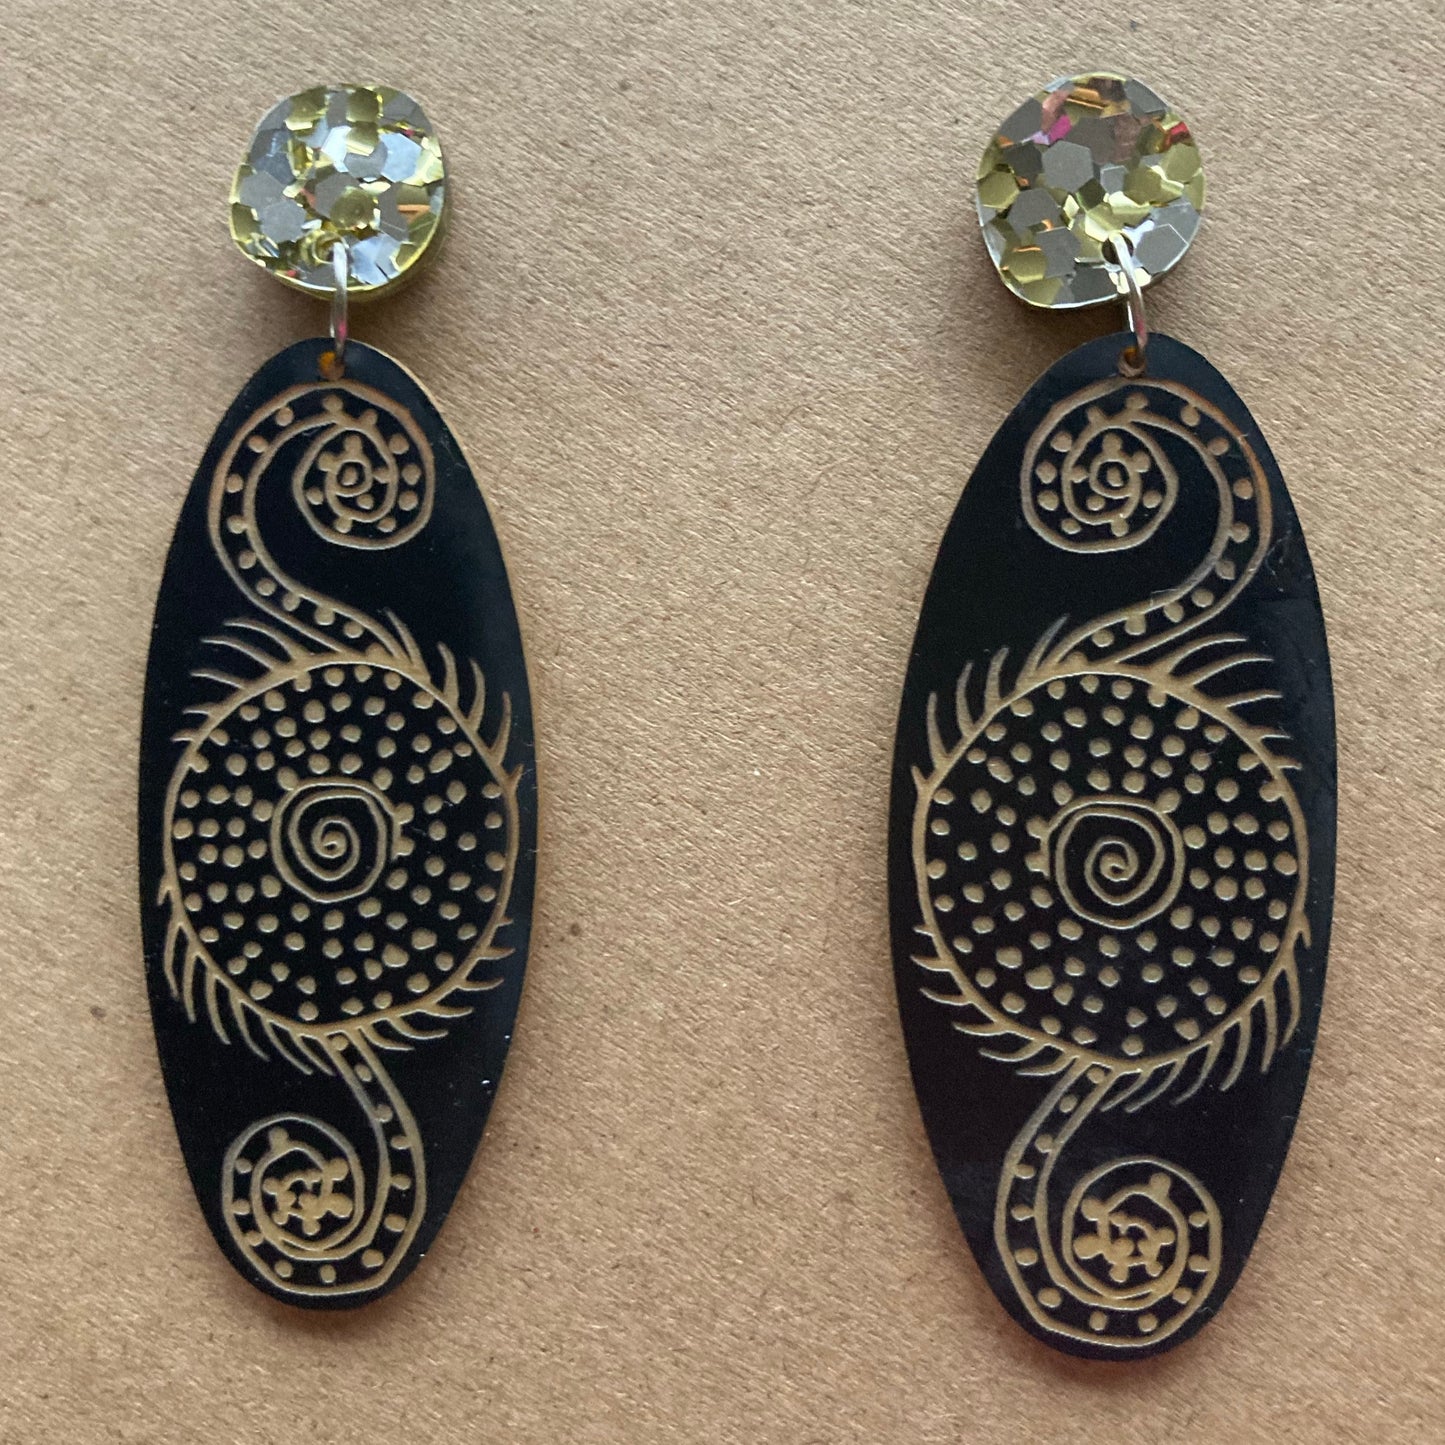 Jiidid (Whirlpool) earrings